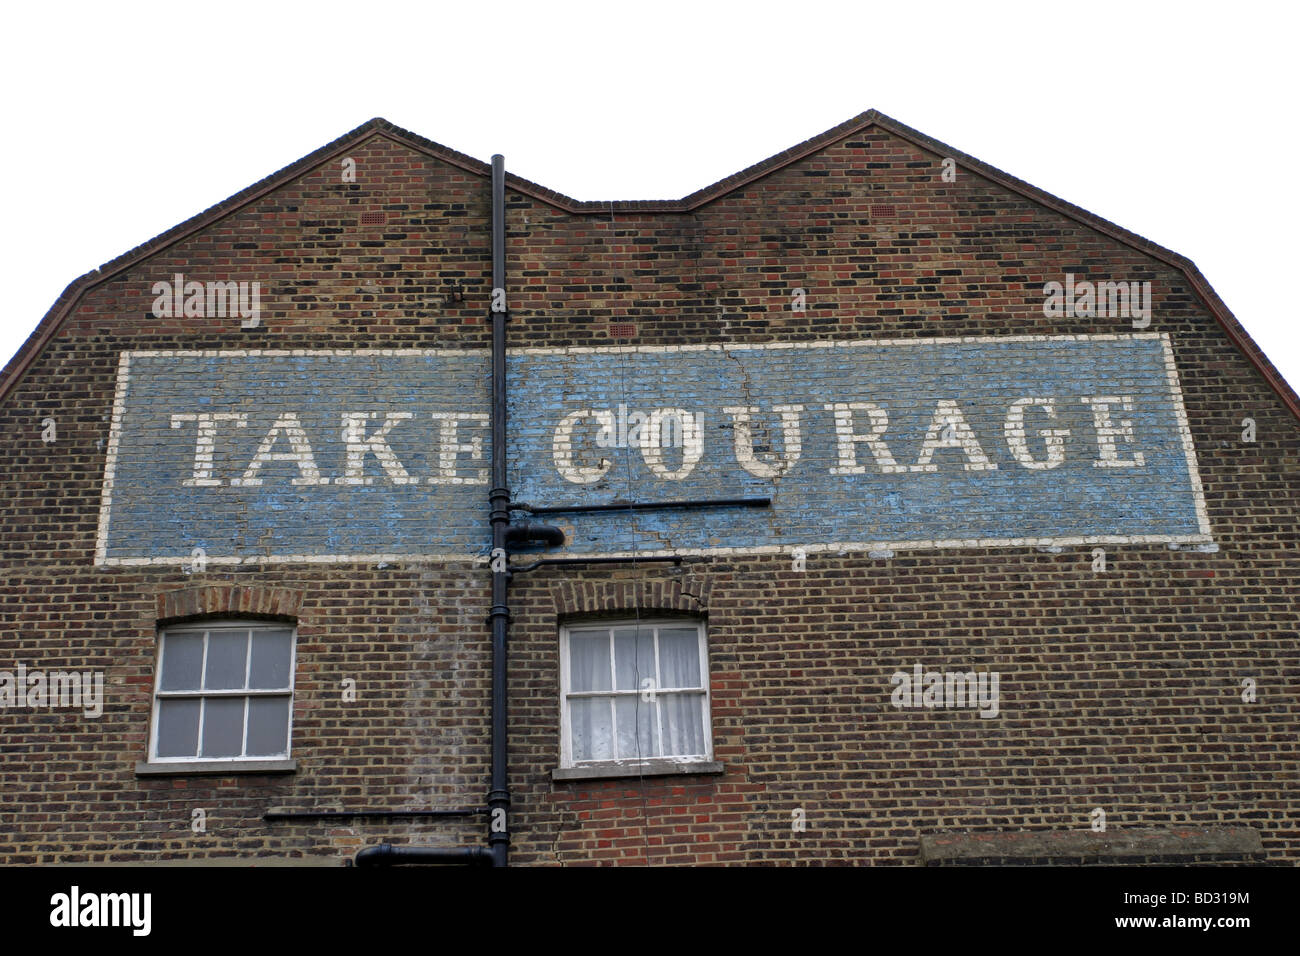 Take Courage brewery sign, Borough, London UK Stock Photo